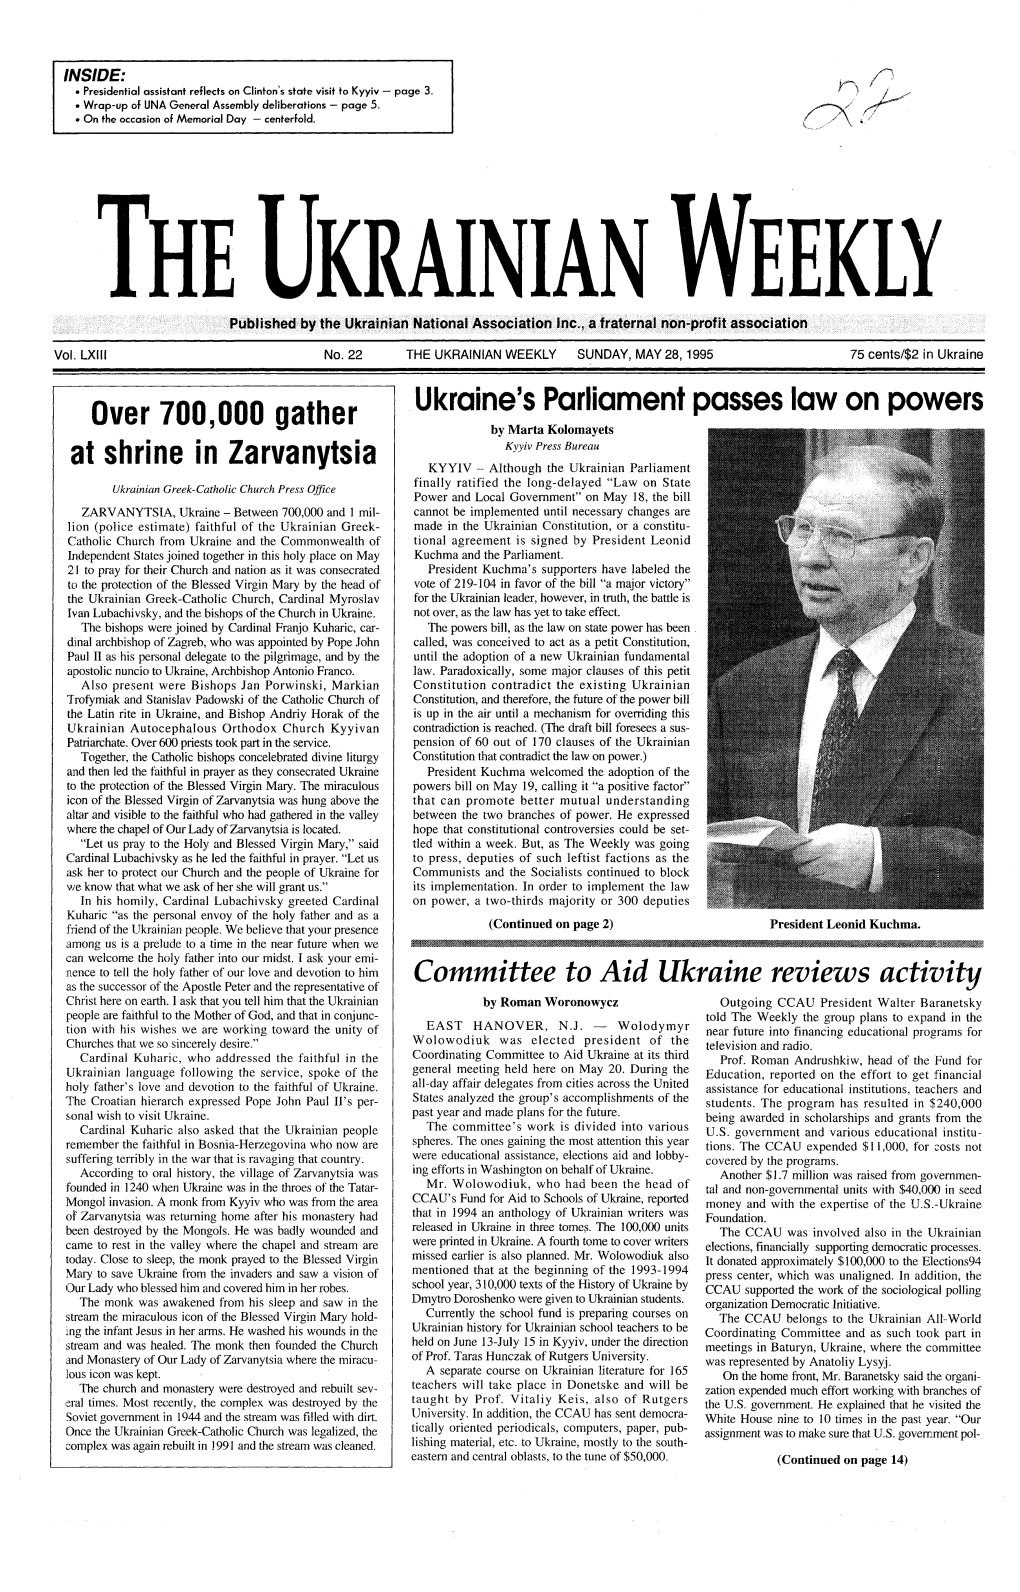 The Ukrainian Weekly 1995, No.22